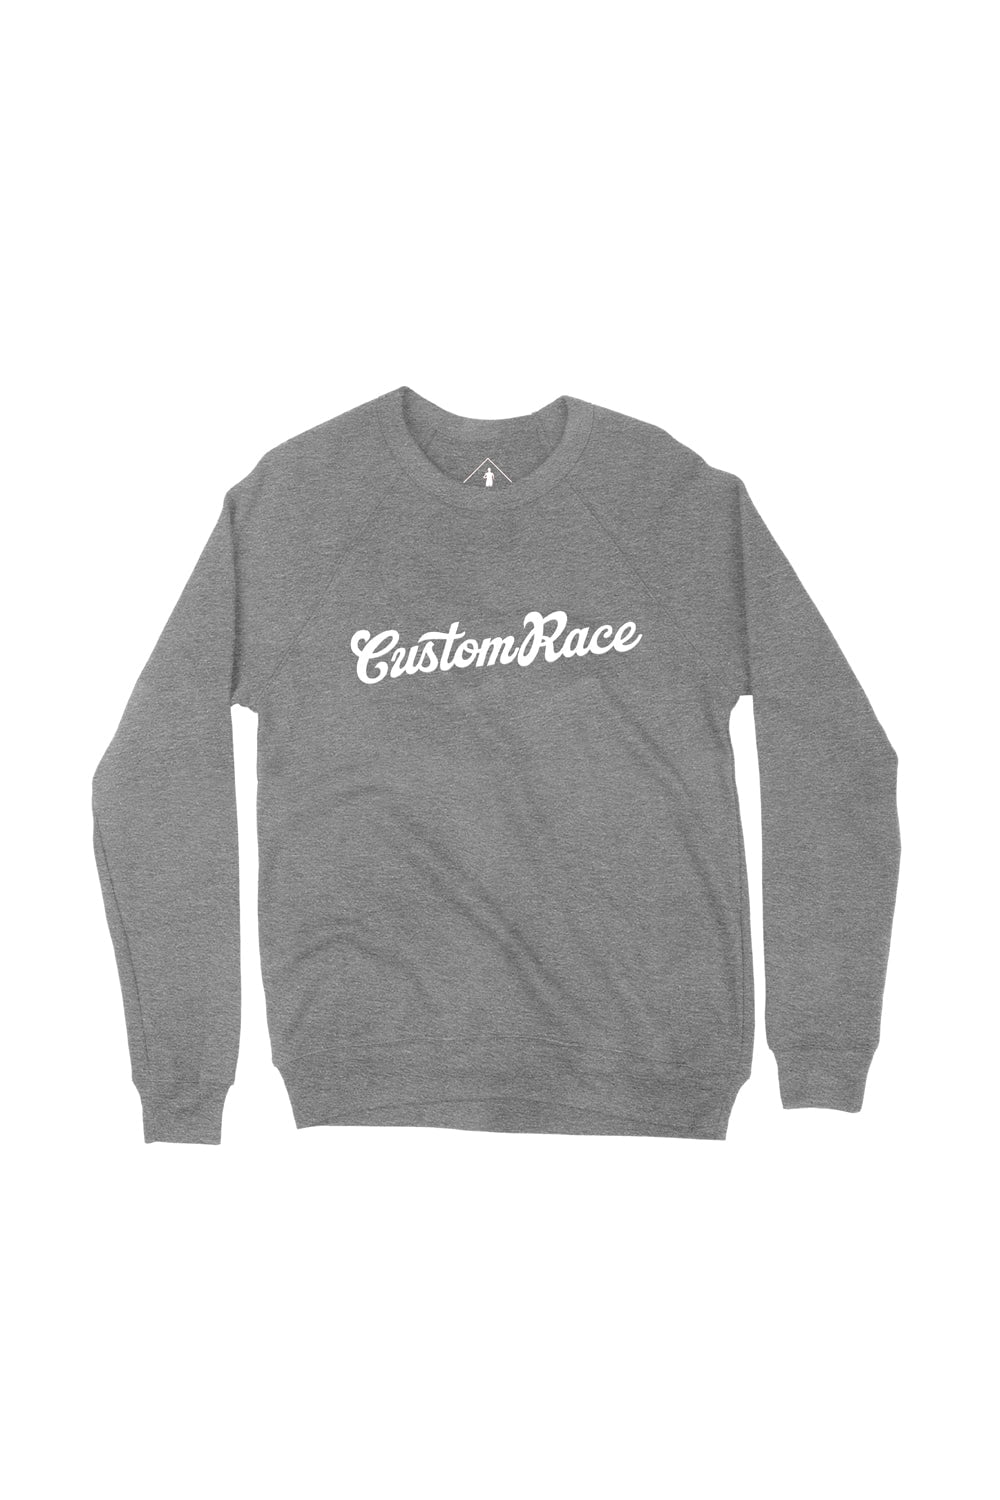 Sarah Marie Design Studio Sweatshirt Custom Race/City Sweatshirt